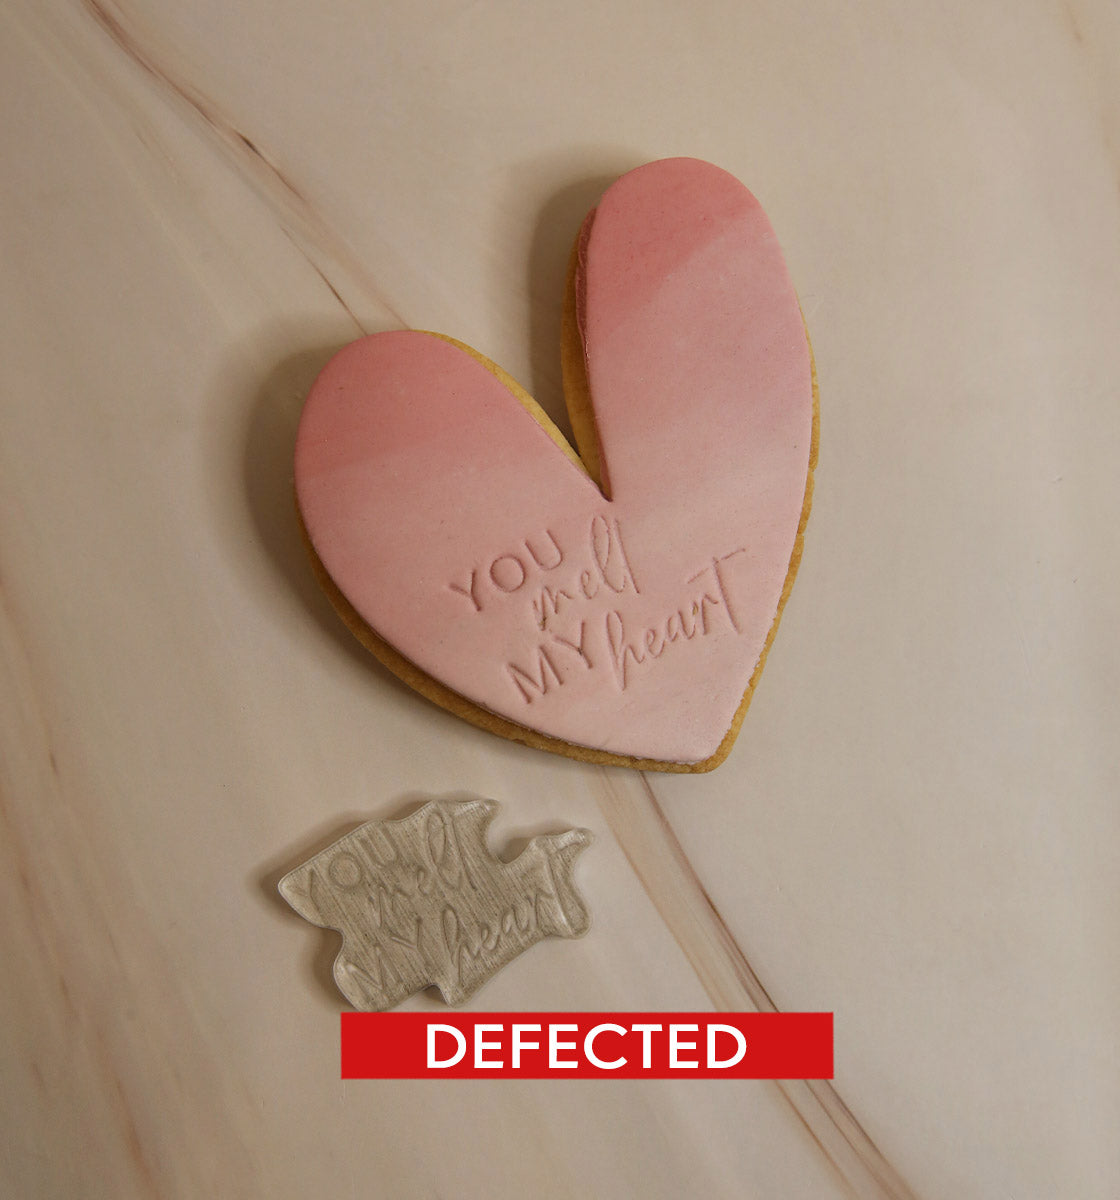 SLIGHTLY DEFECTED - You melt my heart - mini sleek stamp